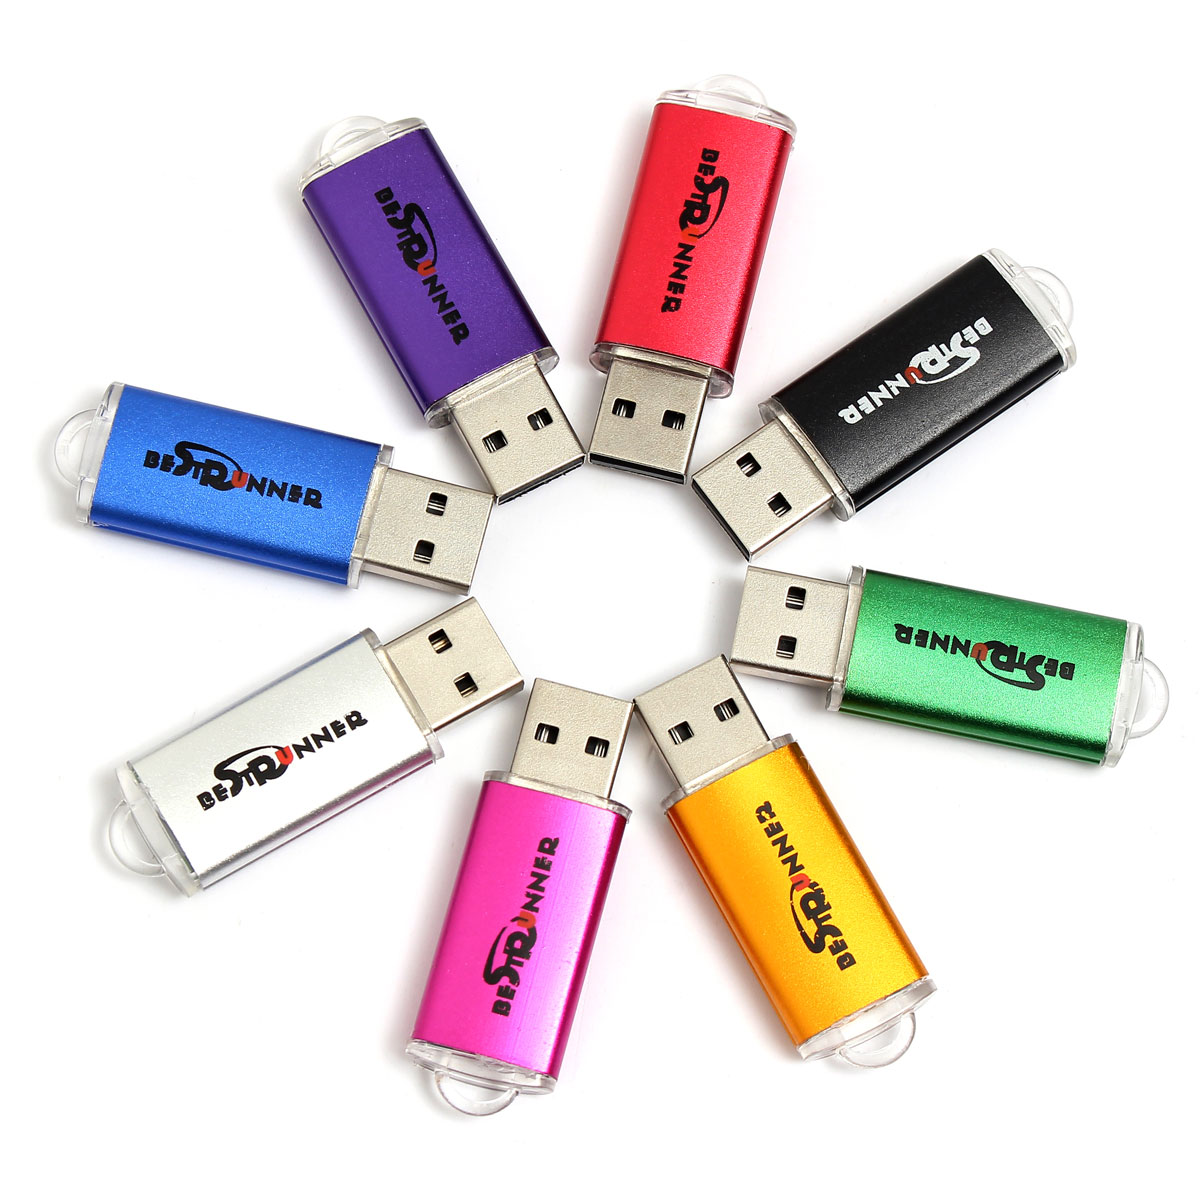 BESTRUNNER-USB-Flash-Drive-20-Flash-Memory-Stick-Pen-Drive-Storage-Thumb-U-Disk-64MB-1633518-1